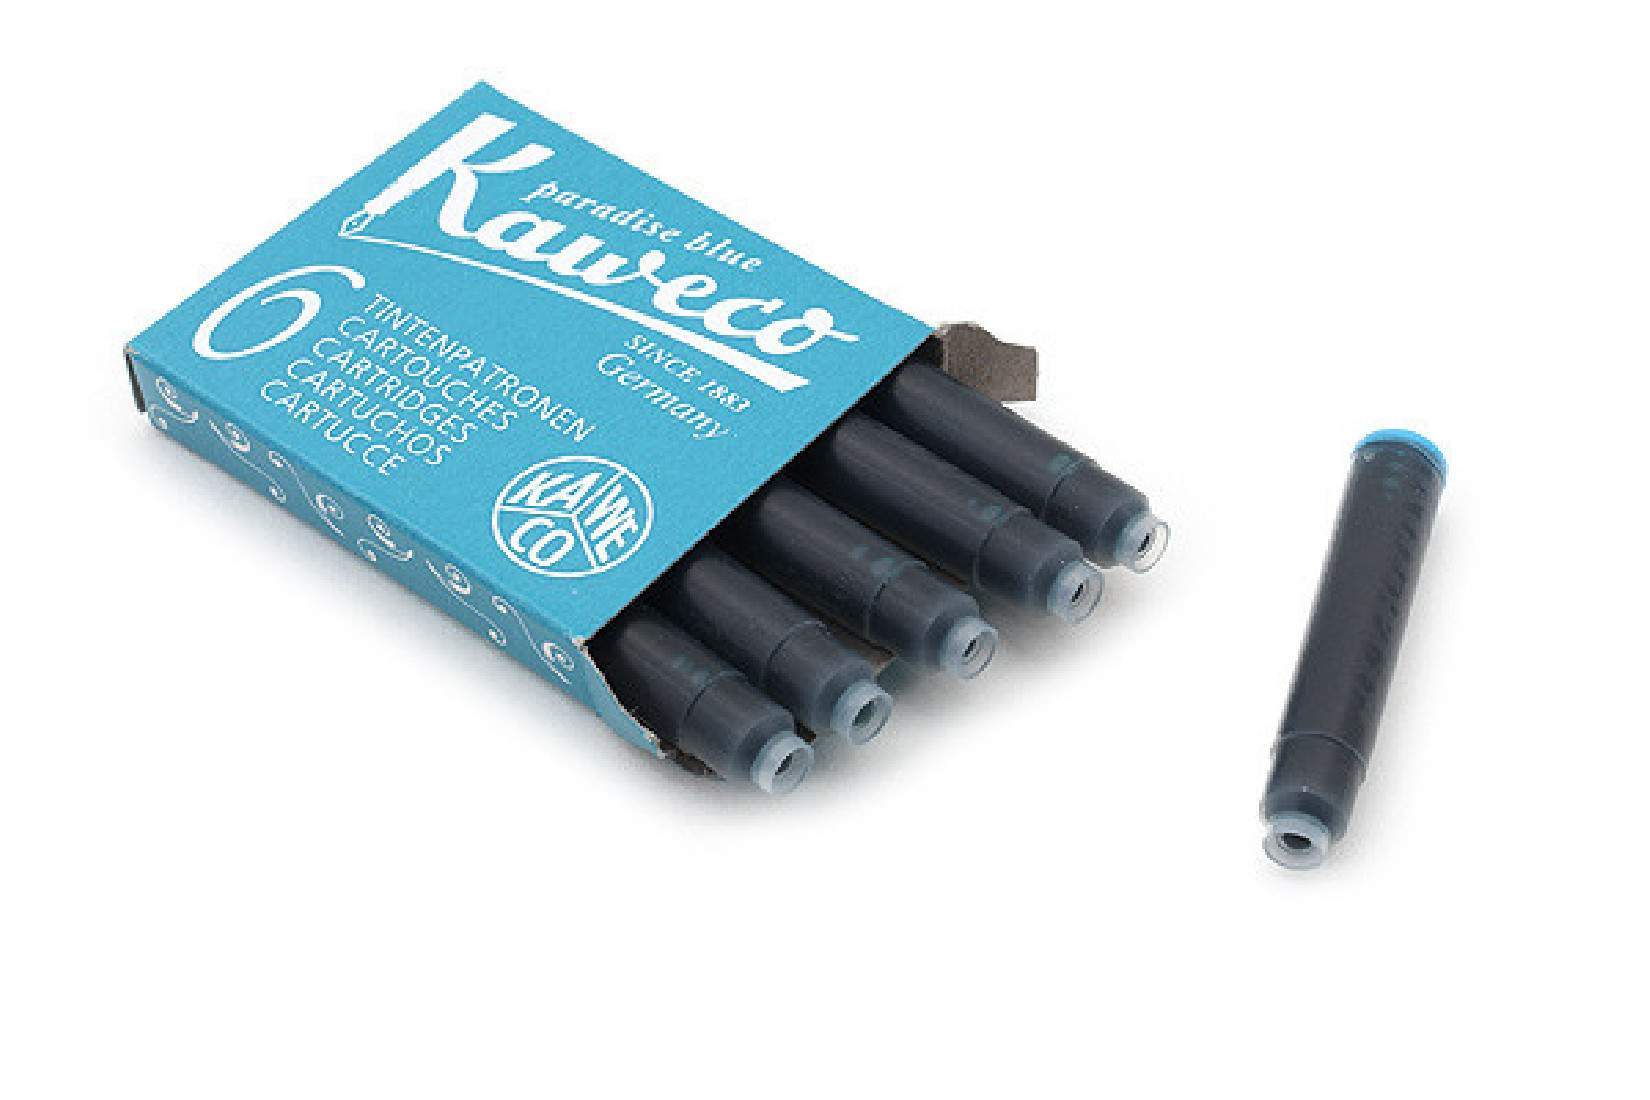 Kaweco ink cartridges 6pcs Light Blue